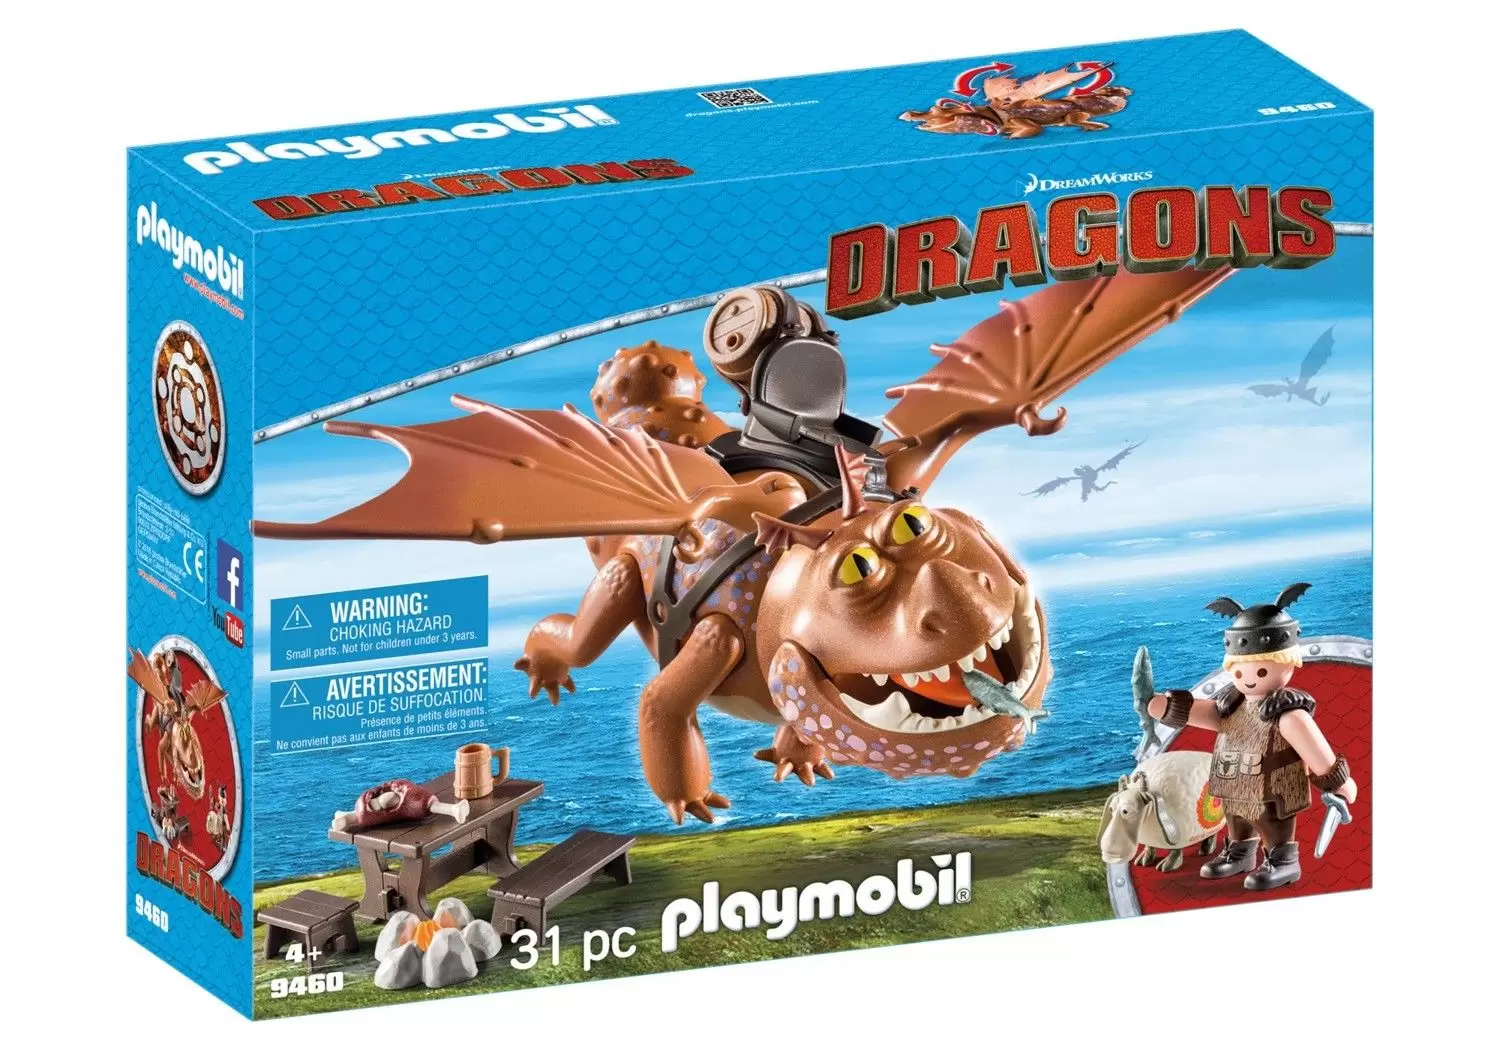 Playmobil Dragons Movie - Fishlegs and Meatlug